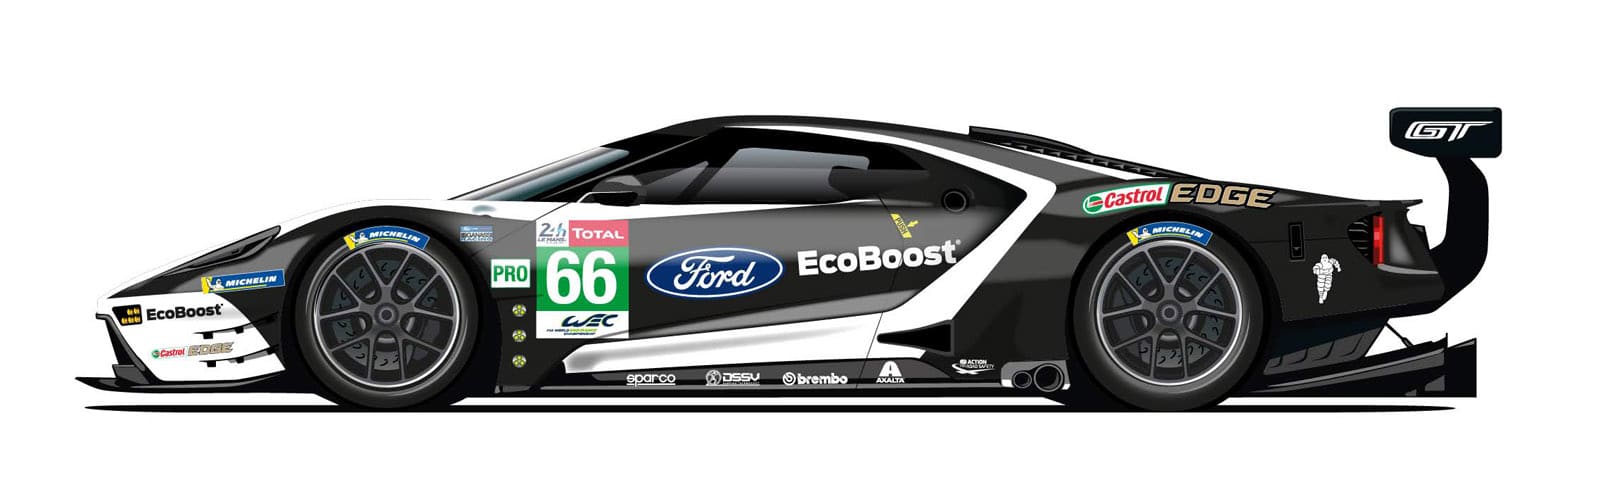 Ford Le Mans 2019 Samochód nr. 66